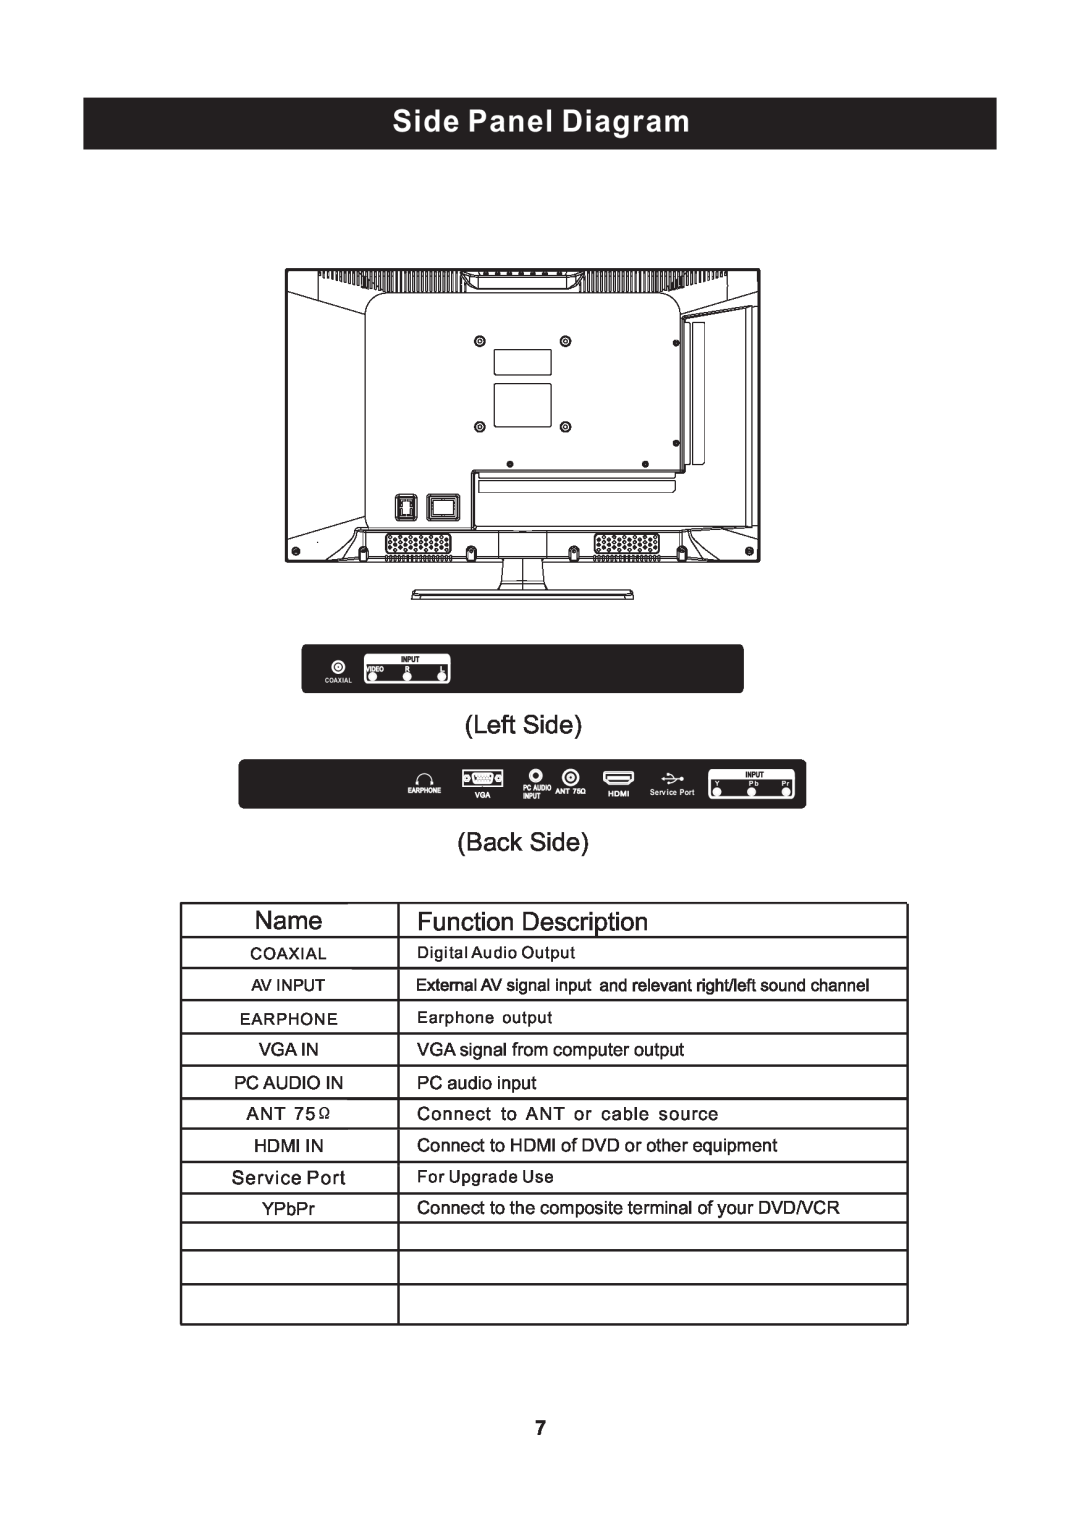 ProScan RLED2445A-B Side Panel Diagram, Left Side, Back Side, Name, Function Description, Service Port, Coaxial, Av Input 